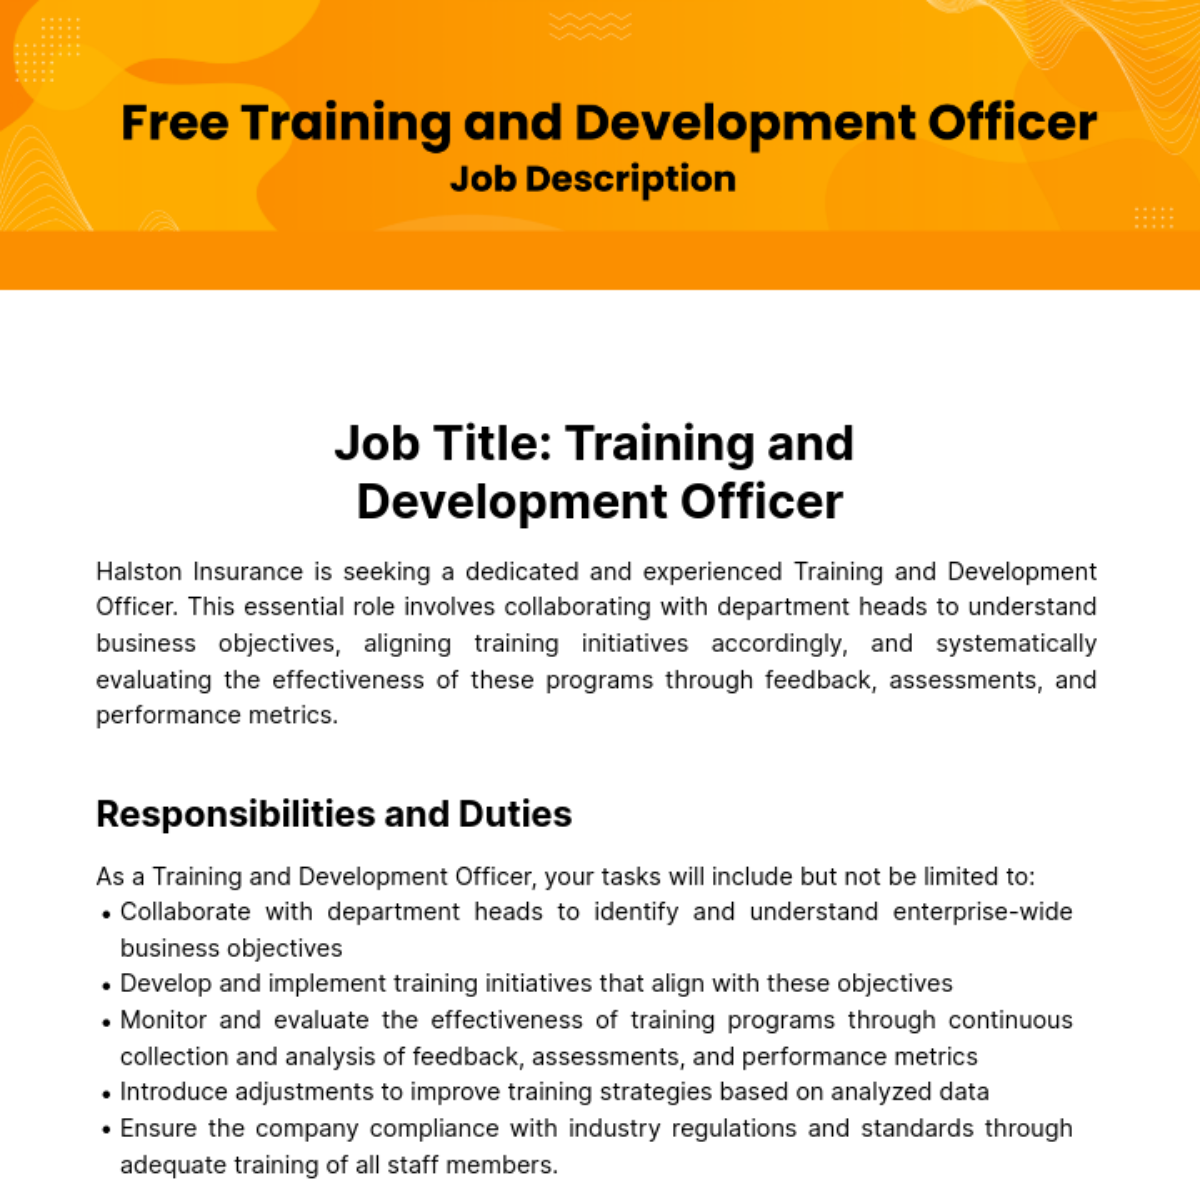 Free Training and Development Officer Job Description Template